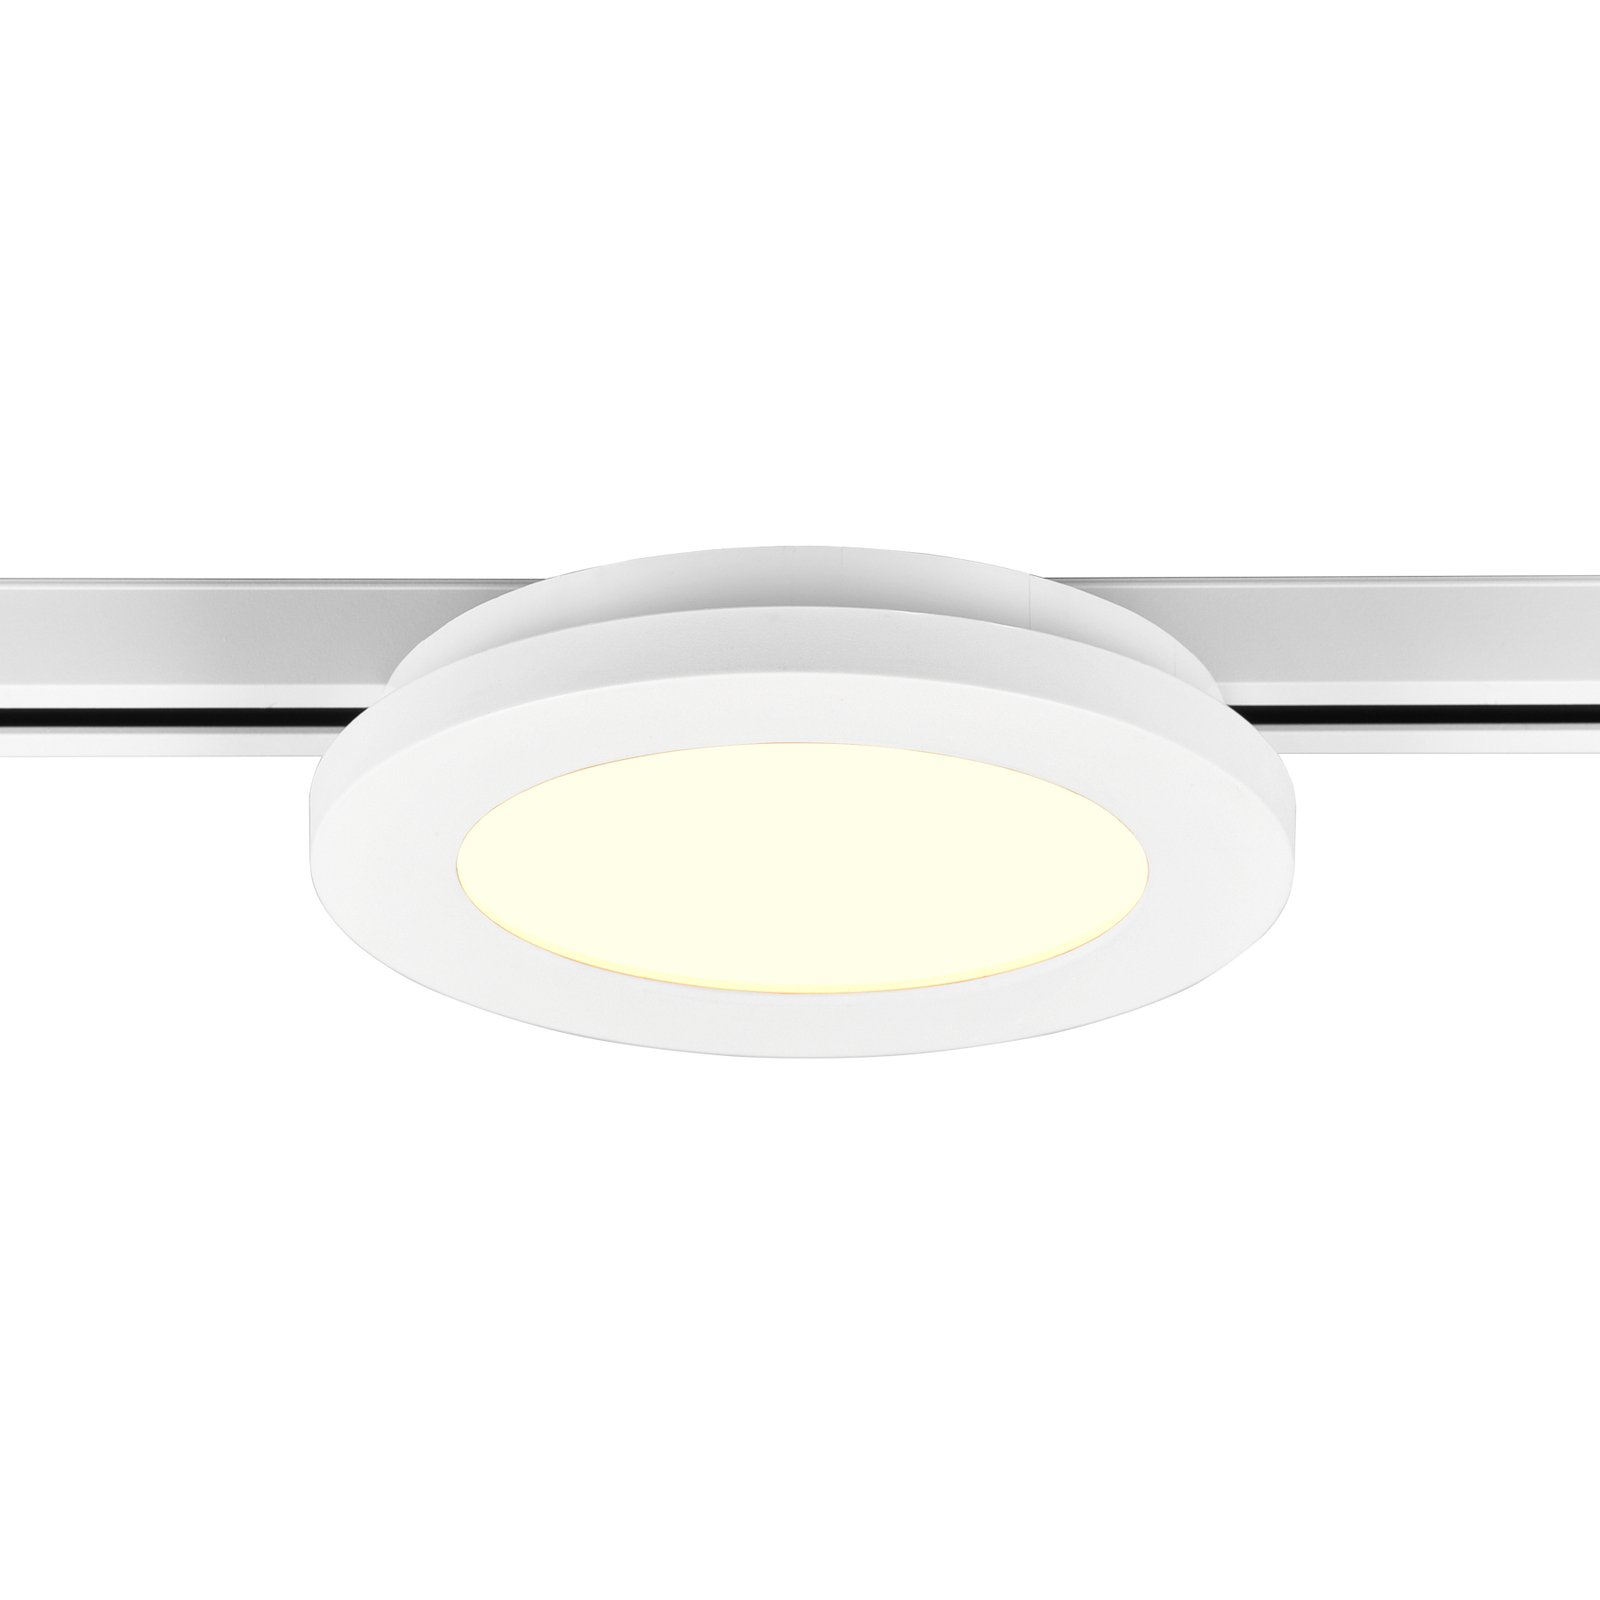 LED plafondlamp Camillus DUOline, Ø 17 cm, wit